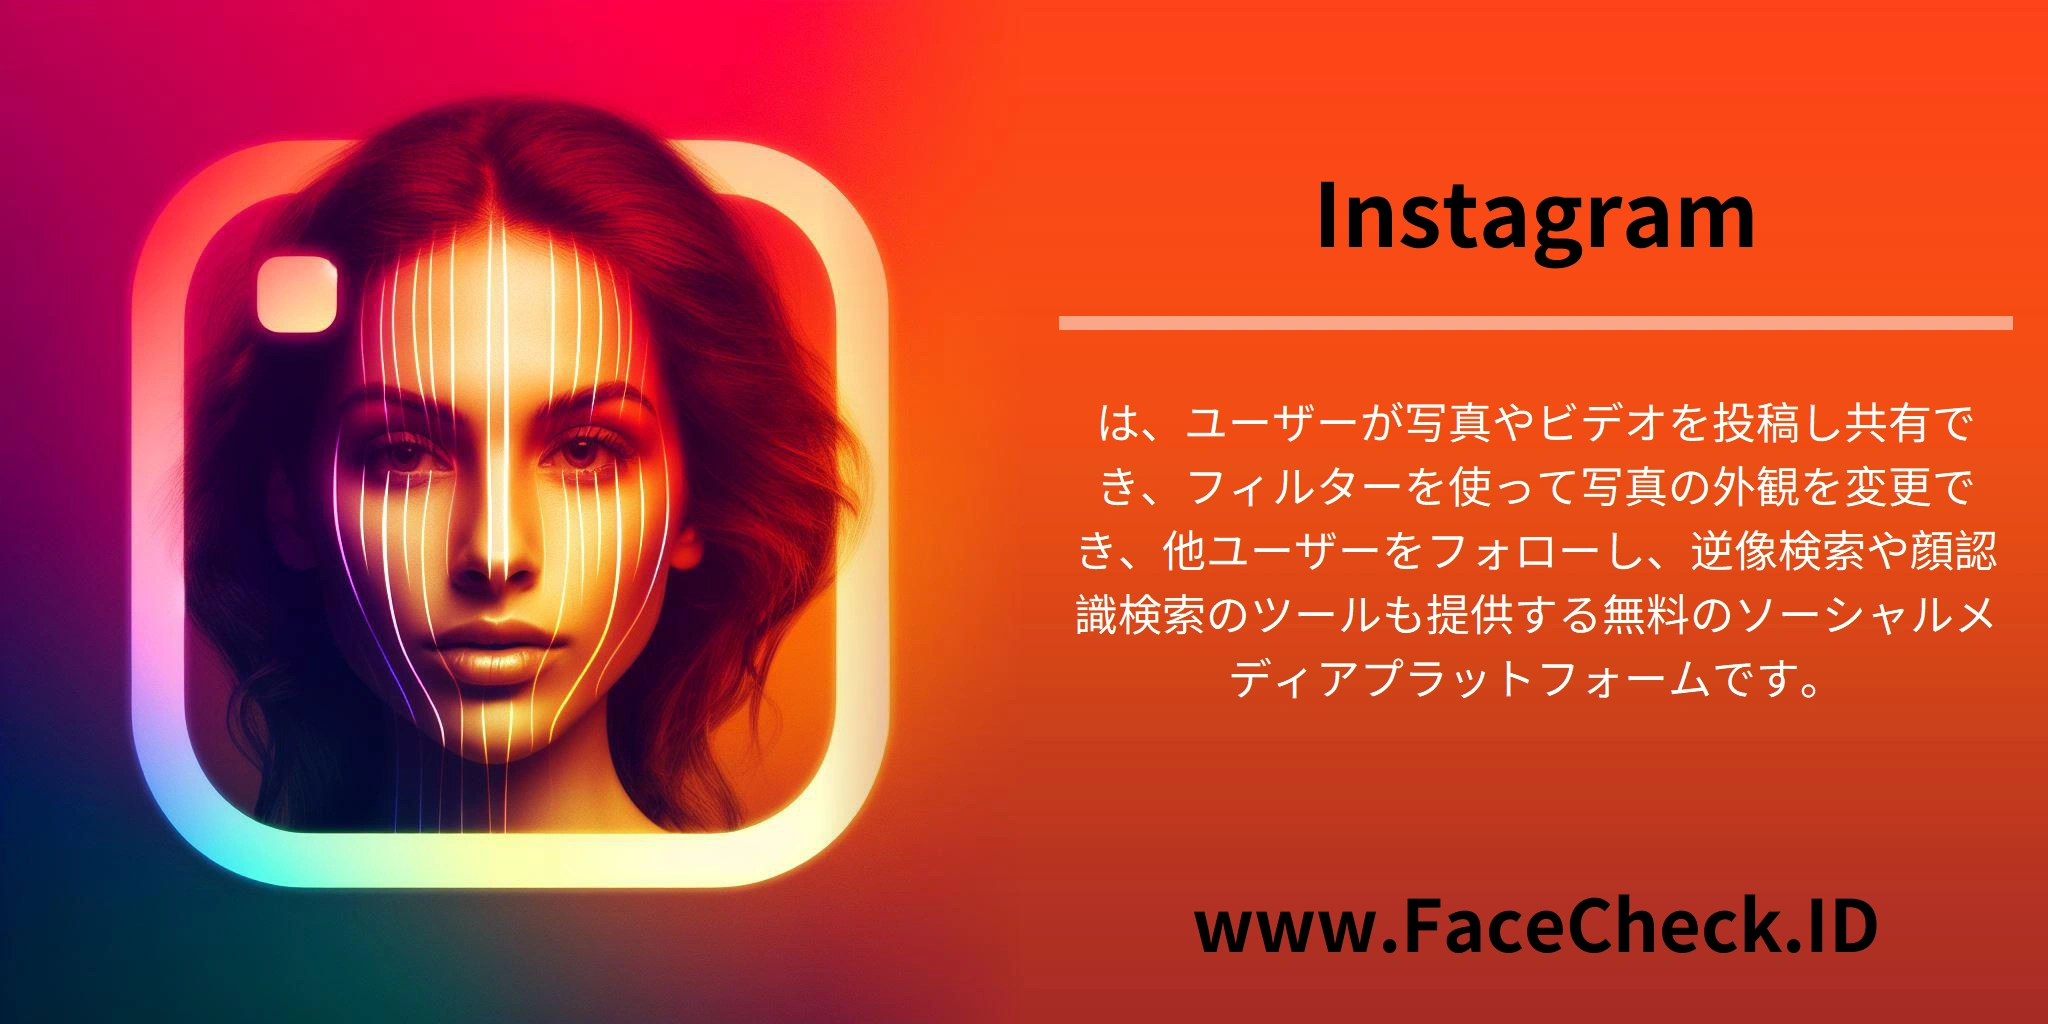 <b>Instagram</b>は、ユーザーが写真やビデオを投稿し共有でき、フィルターを使って写真の外観を変更でき、他ユーザーをフォローし、逆像検索や顔認識検索のツールも提供する無料のソーシャルメディアプラットフォームです。